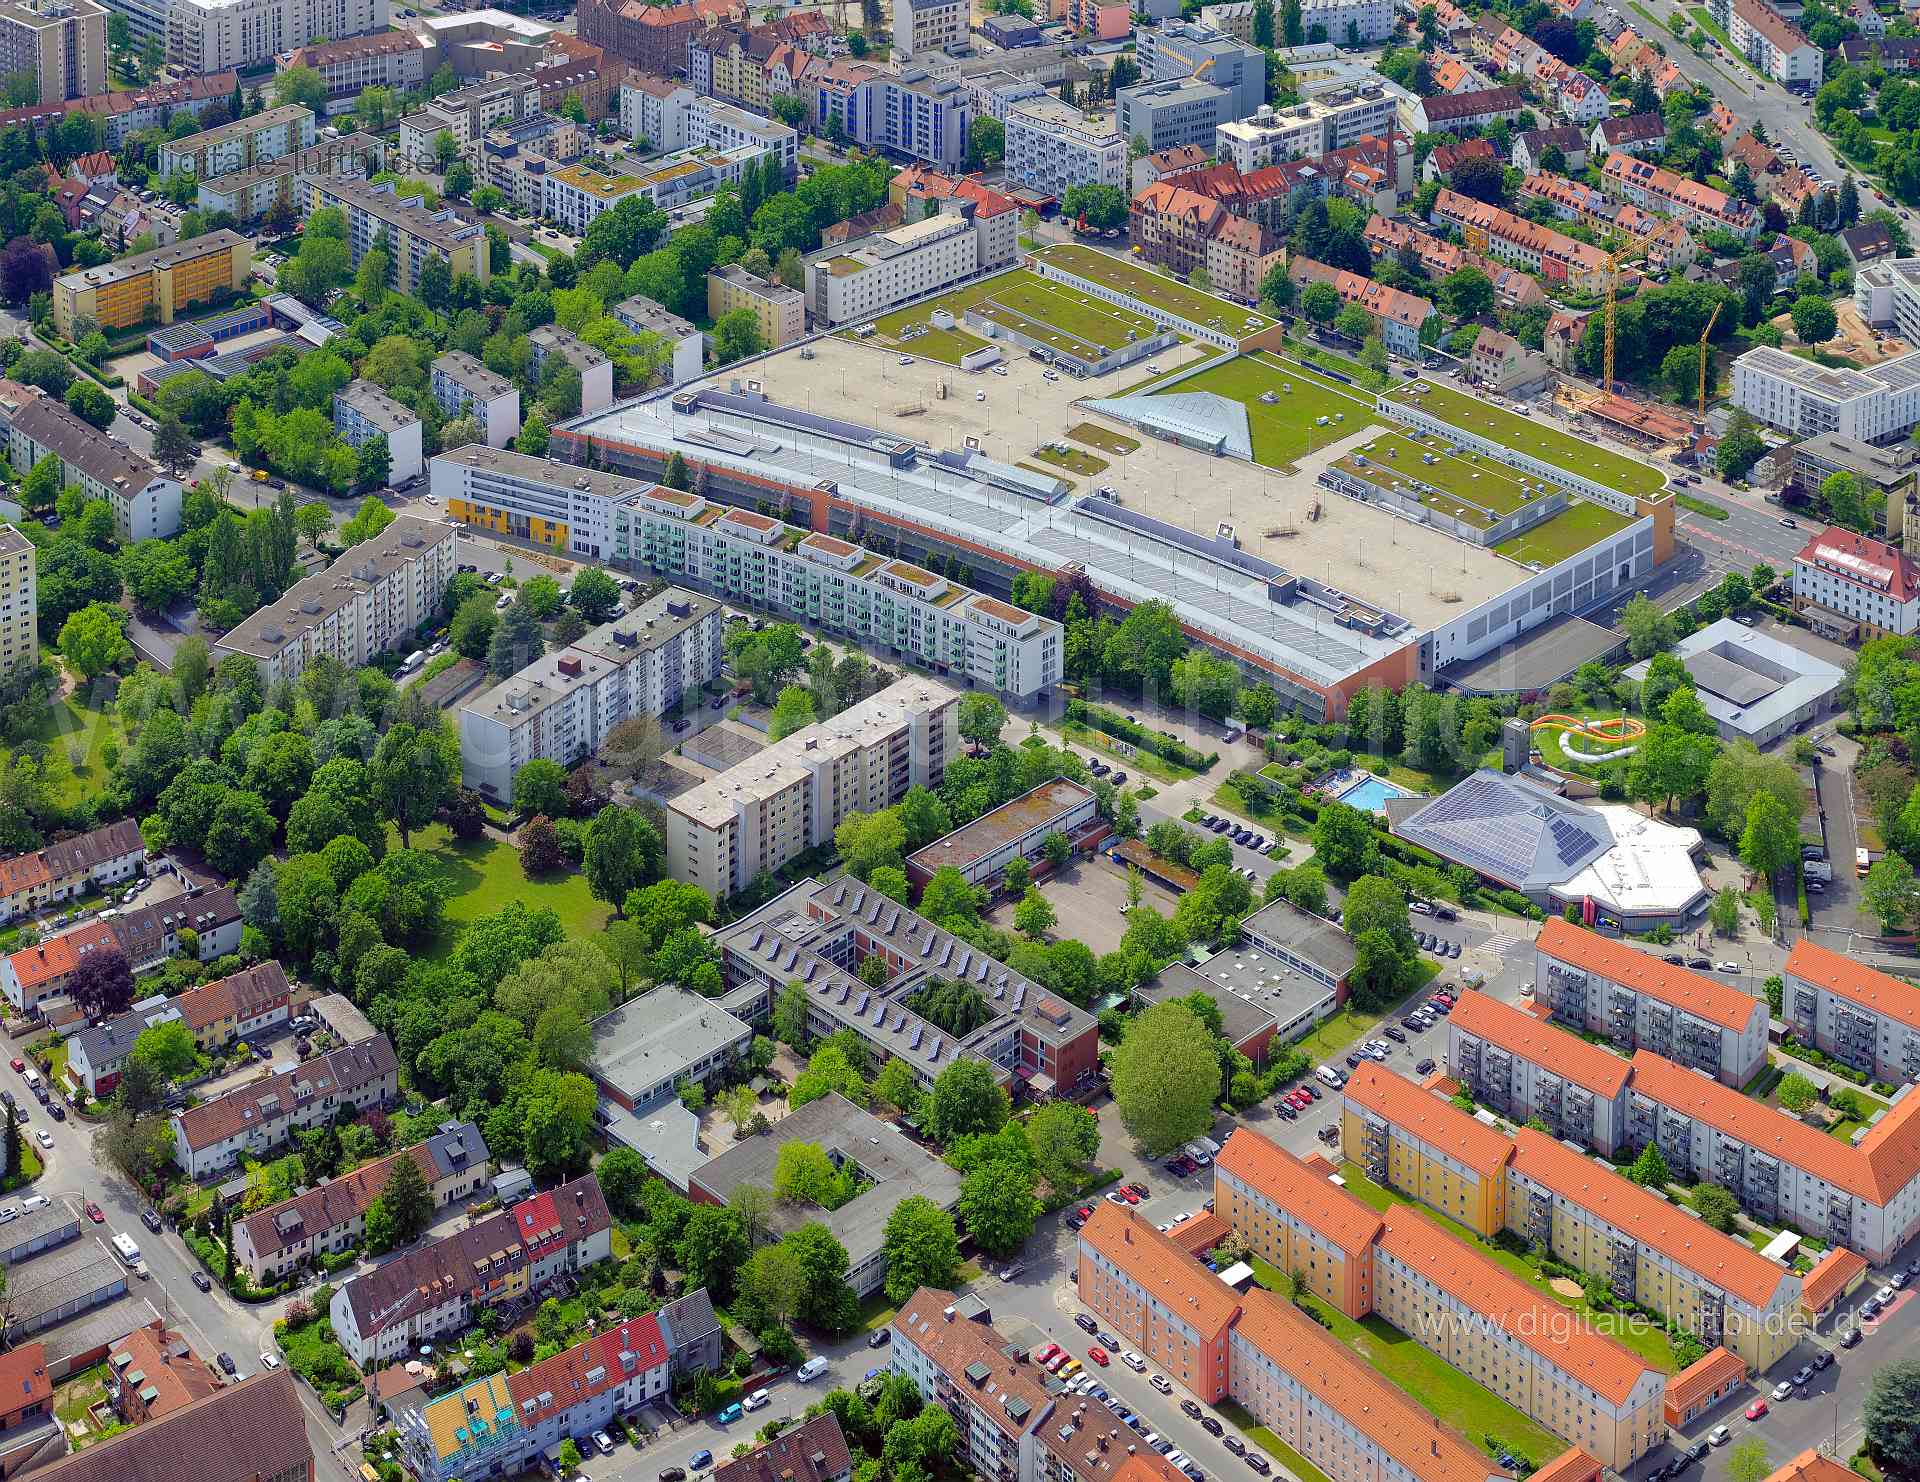 Luftbild - Veit-Stoß-Realschule, Ort: Nürnberg, Tags: Veit-Stoß-Realschule, Schule, Schoppershof, Weigelshof, , Elbinger S...